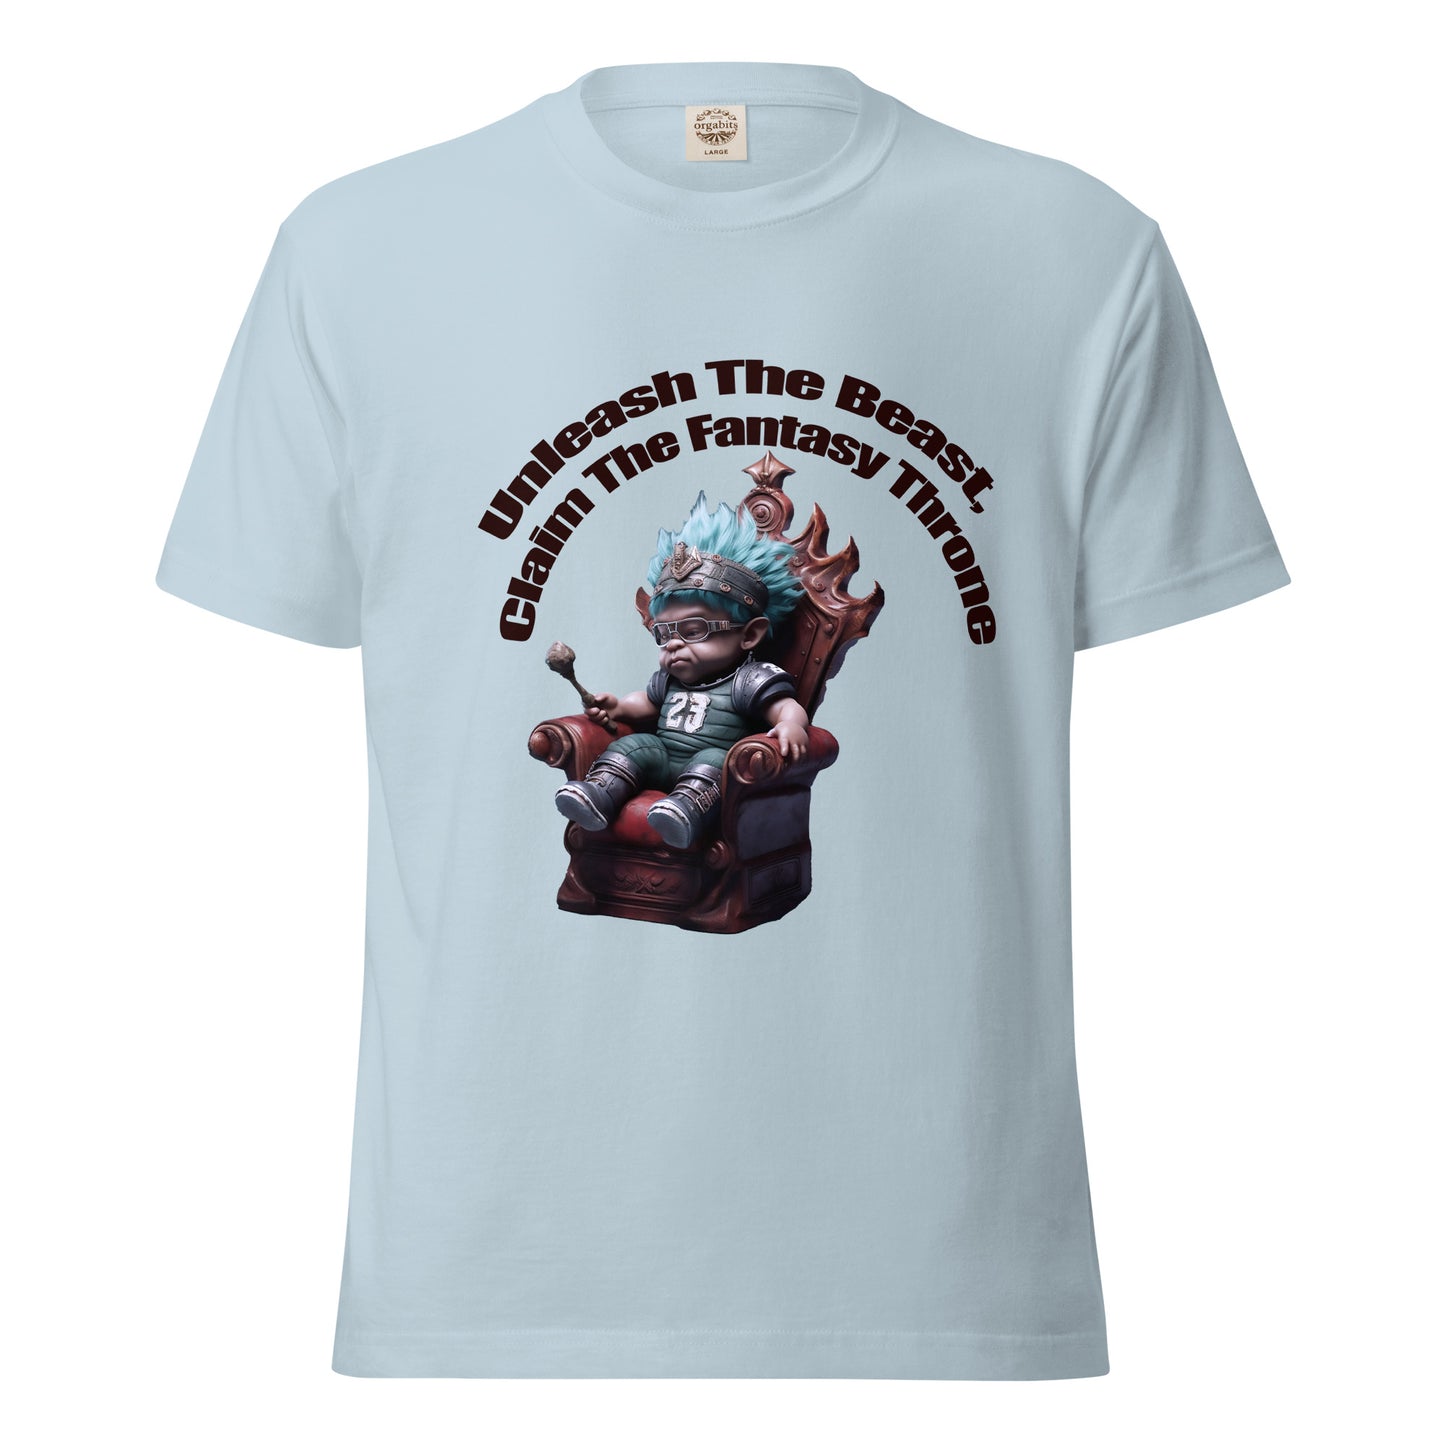 Gridiron King Lightweight cotton t-shirt